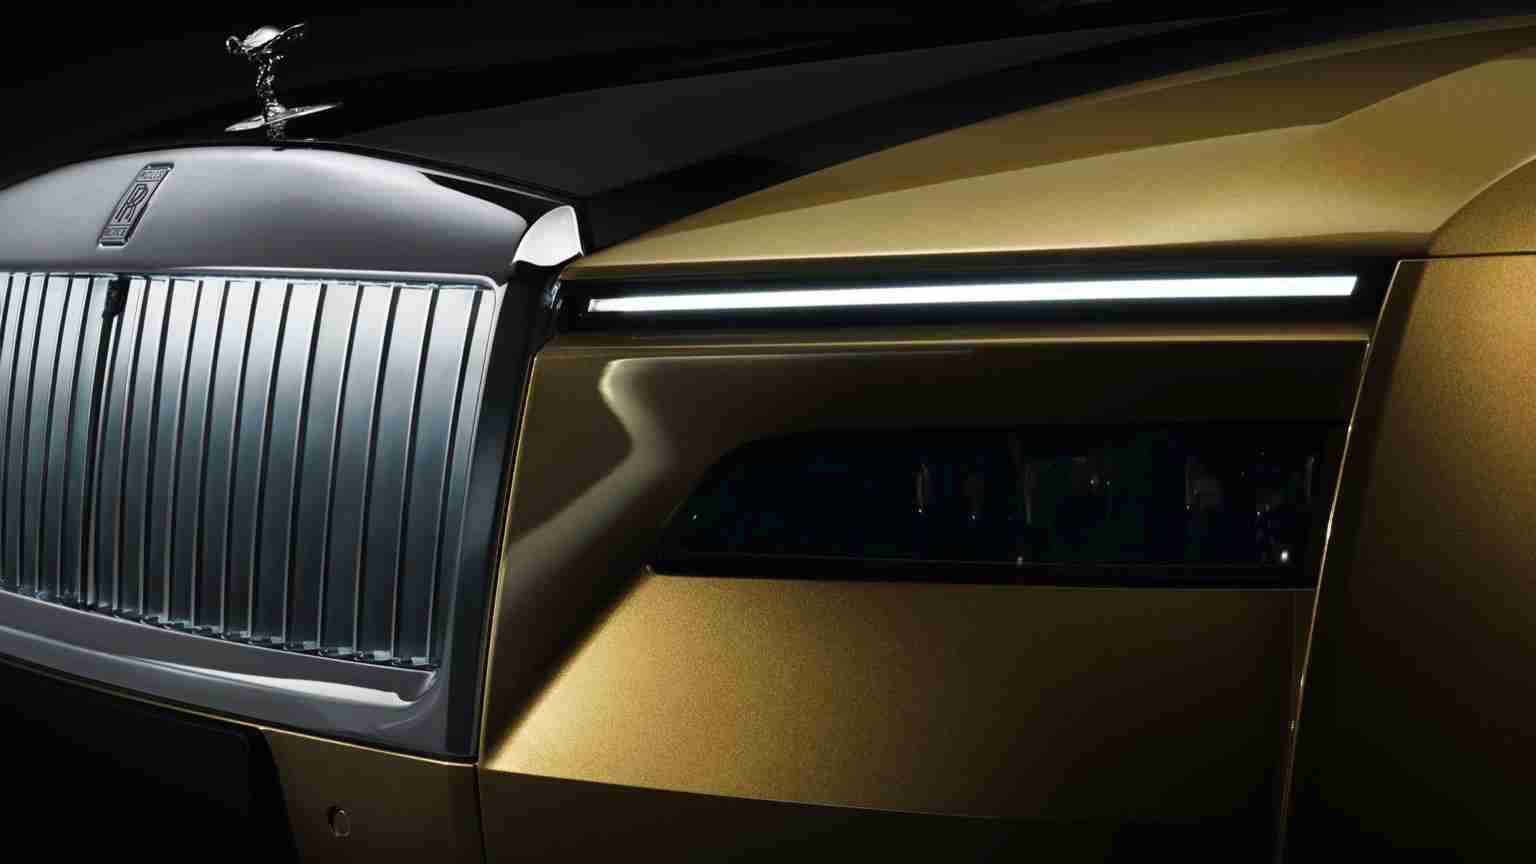 Rolls Royce Spectre Seating Capacity (2)